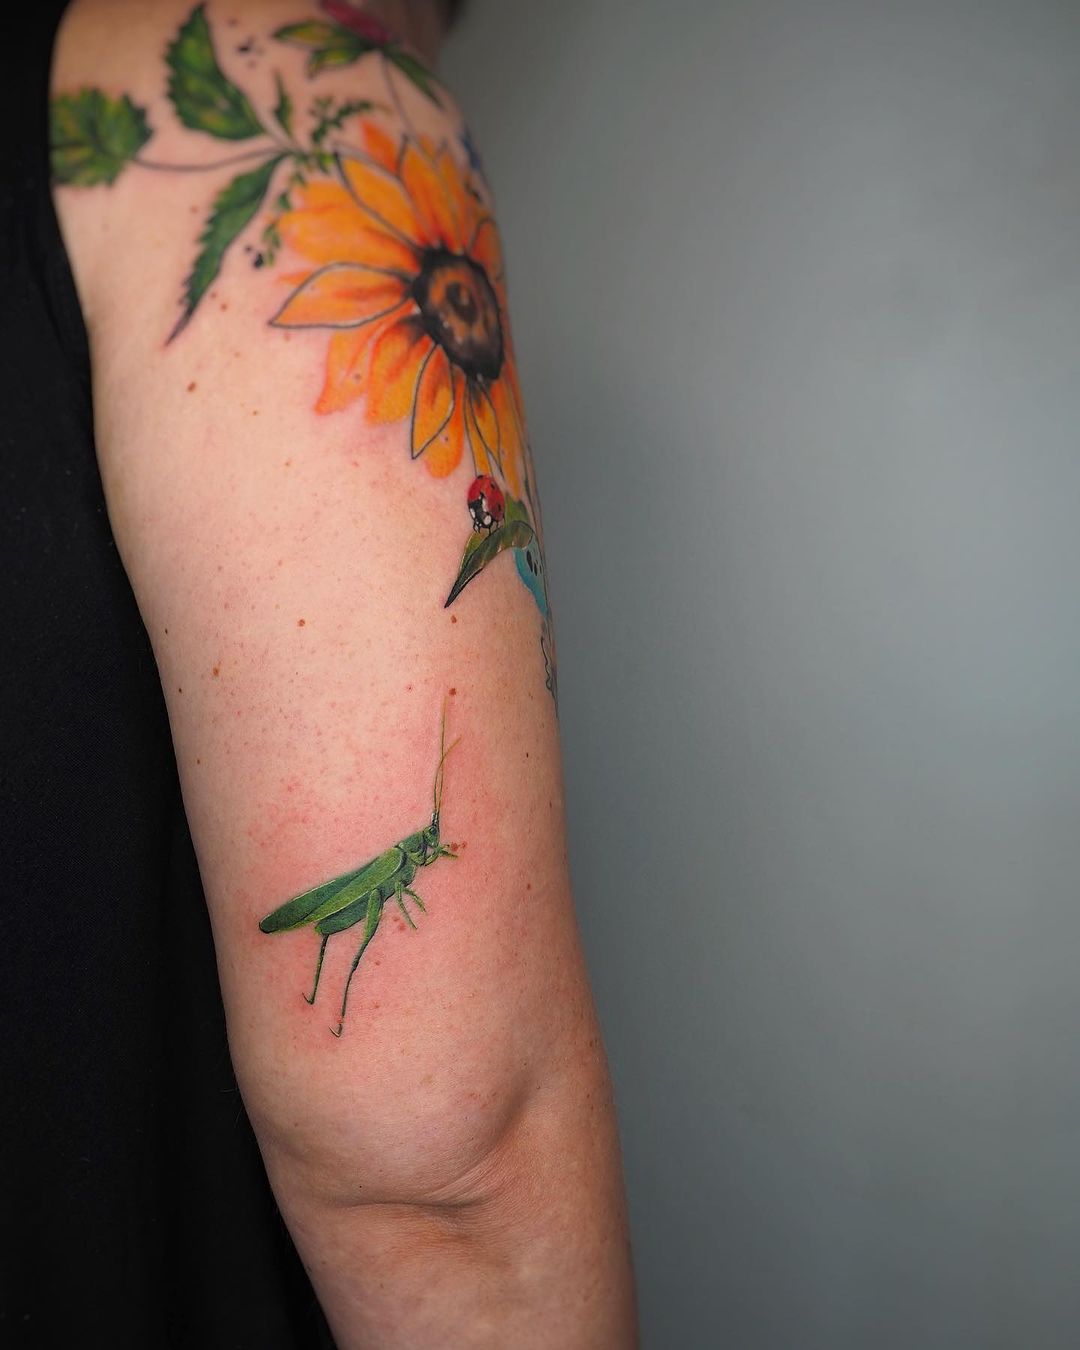 Minimalistic grasshopper tattoo by moni lien pham